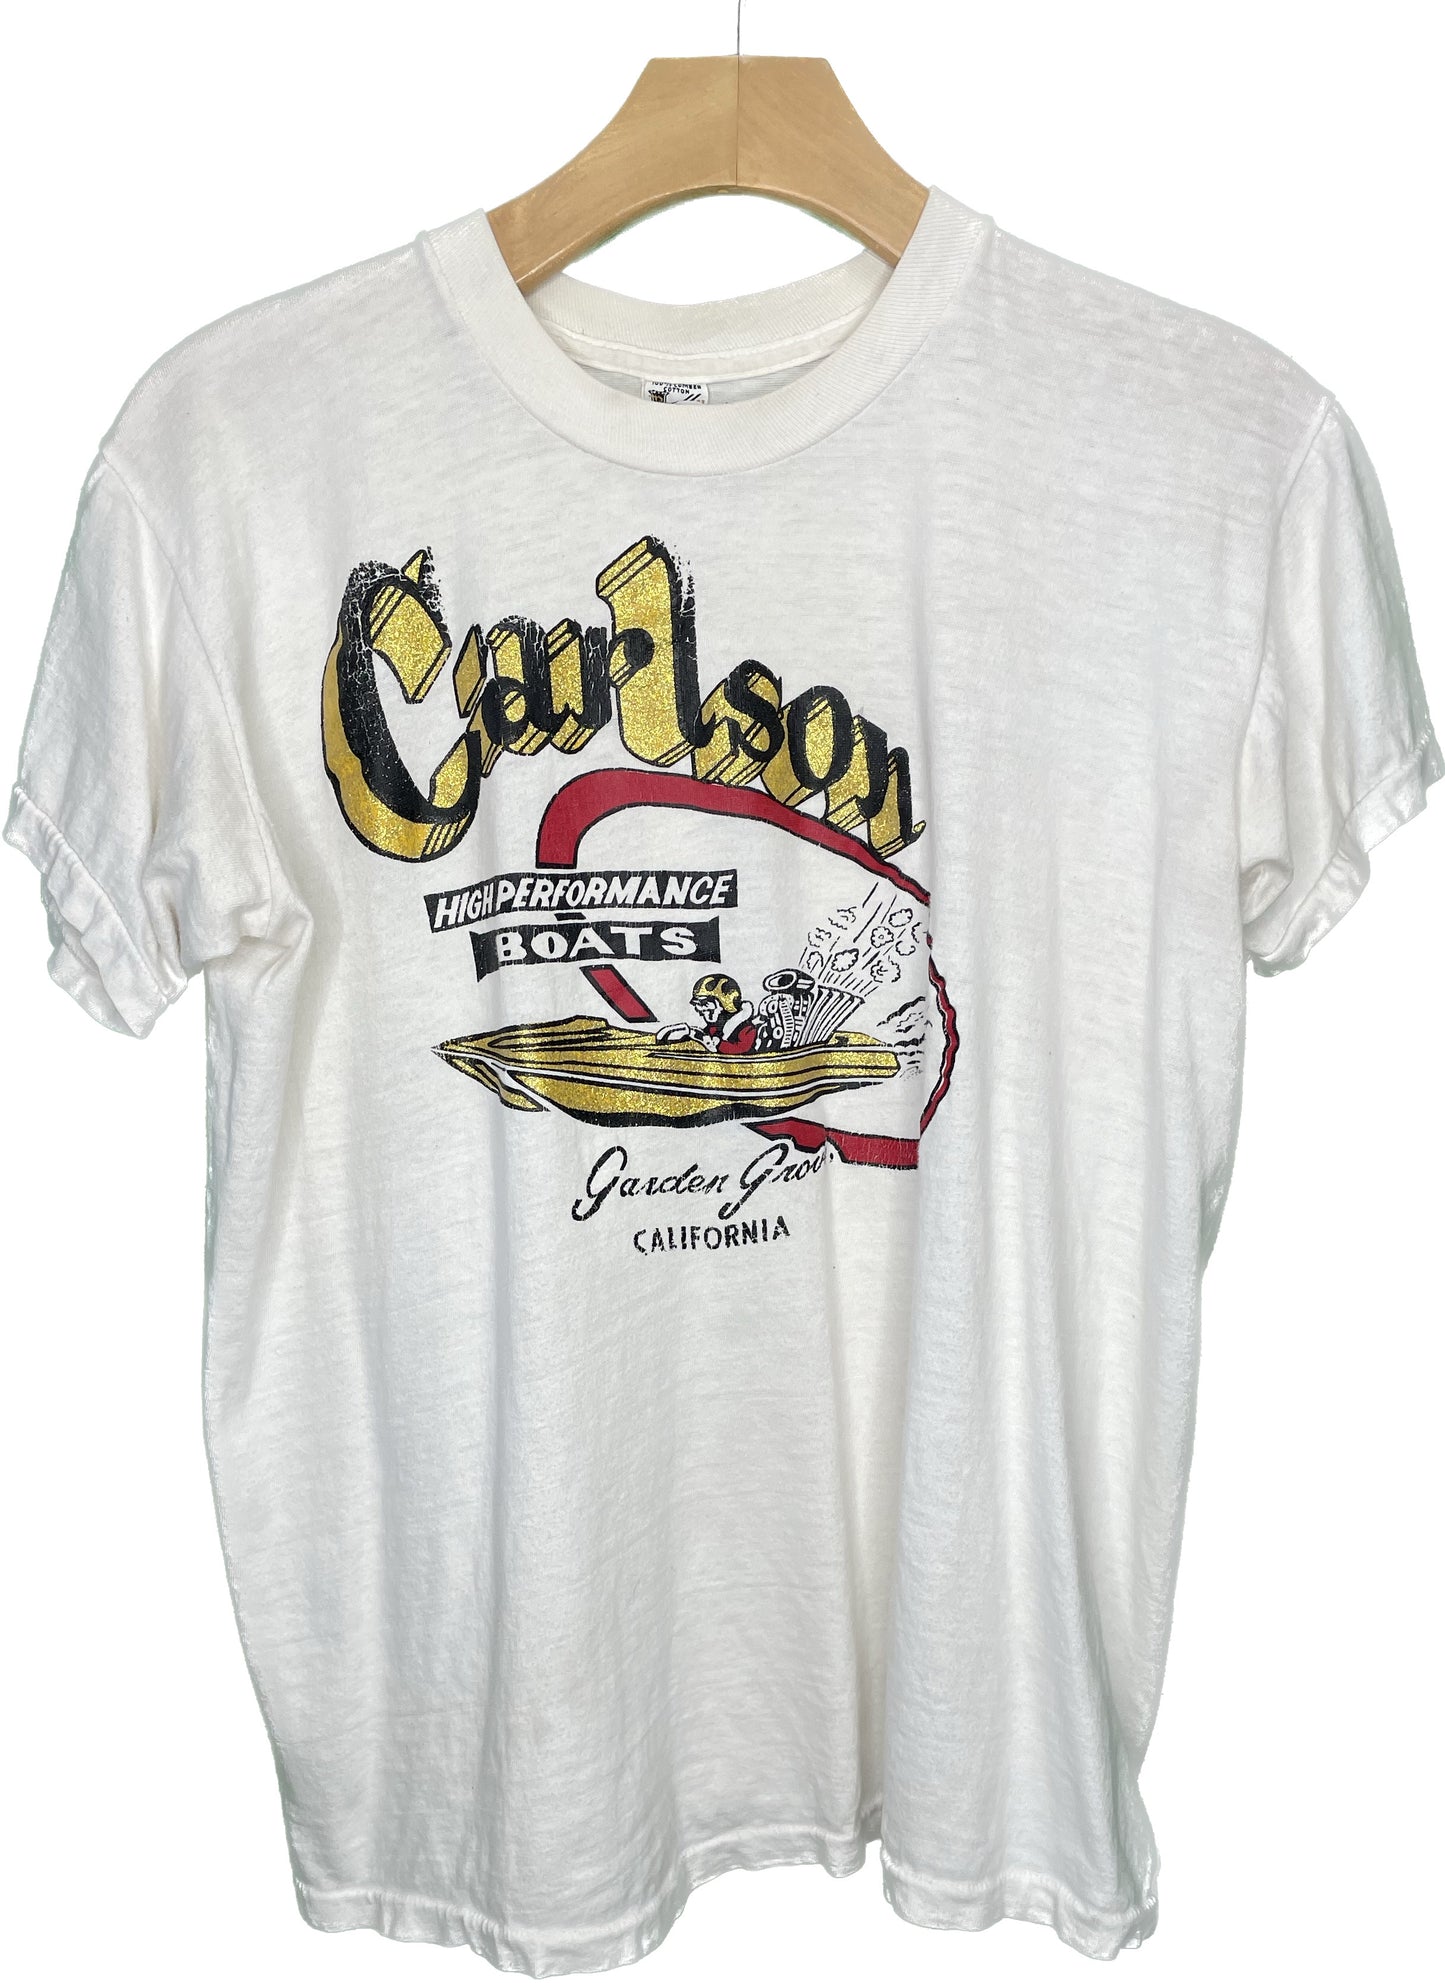 Vintage 60s L/XL Carlson Performance Boats Garden Grove T-Shirt